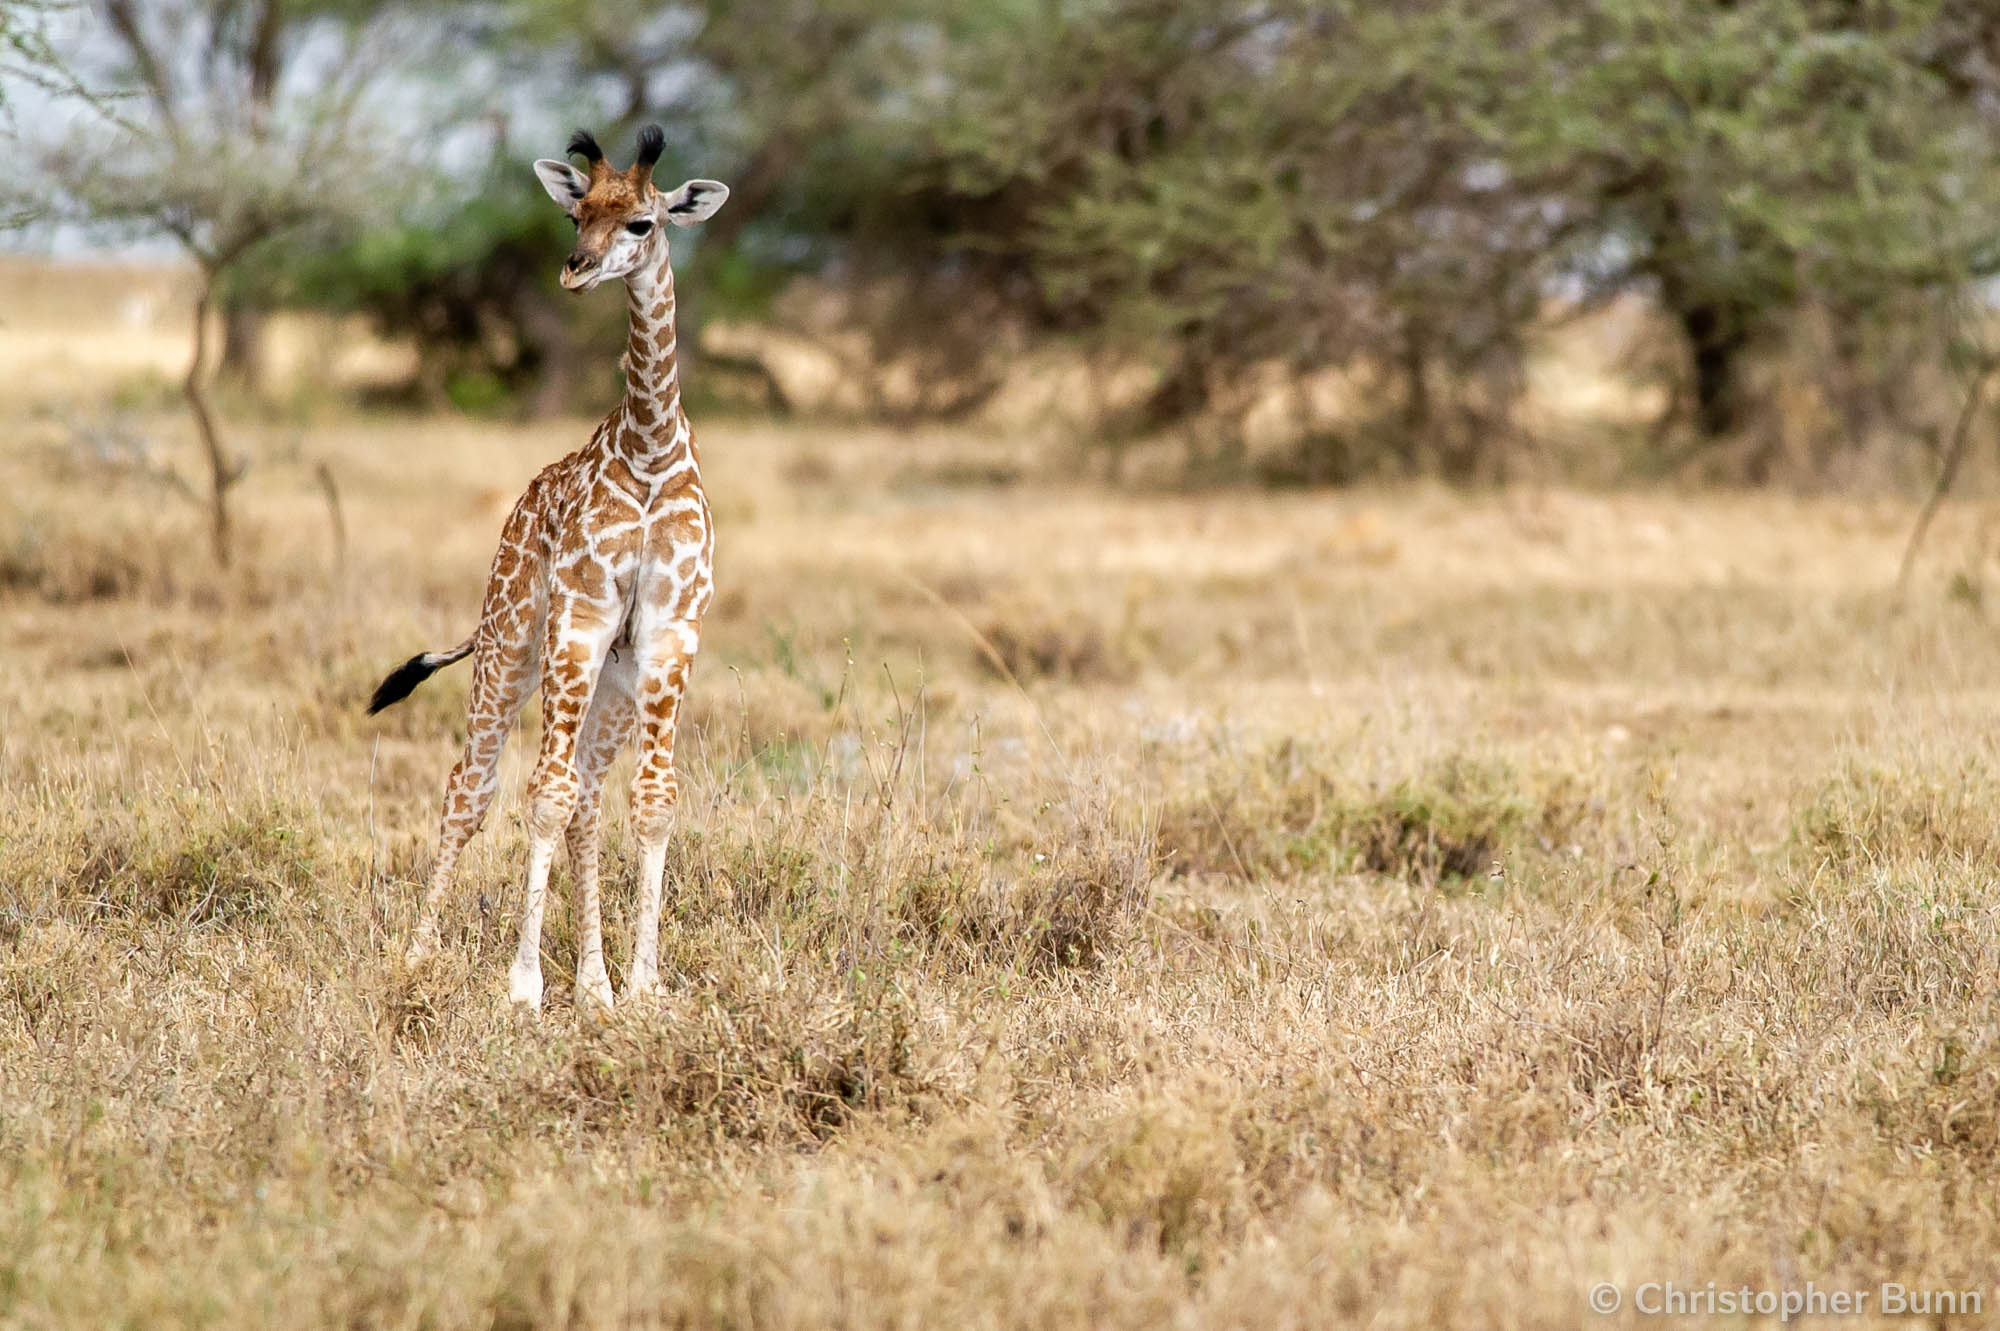 A young giraffe in Serengeti National Park, Tanzania.